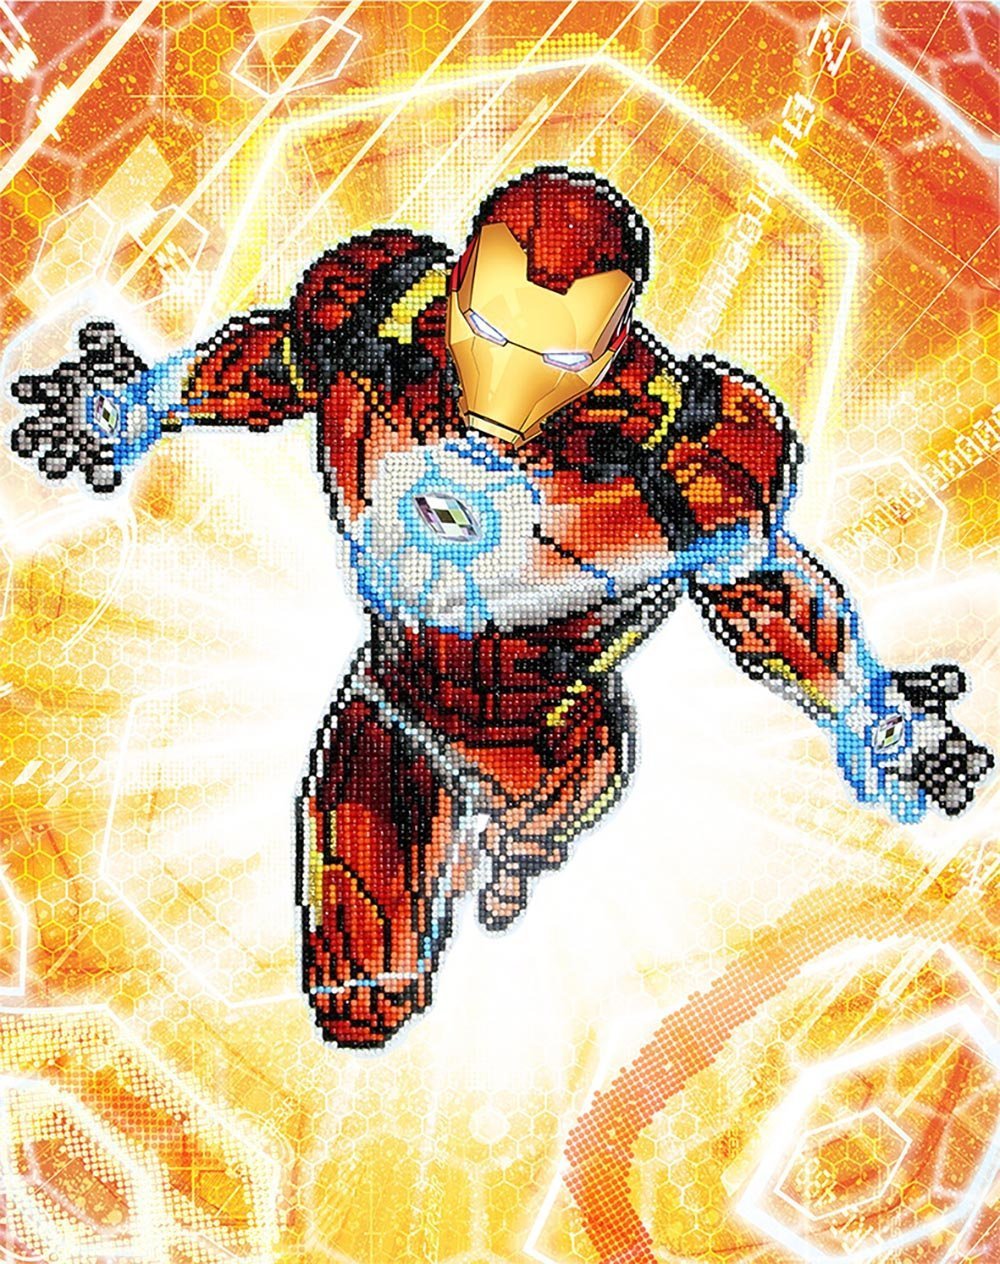 Iron Man Blast off - The Avengers - Diamond Dotz